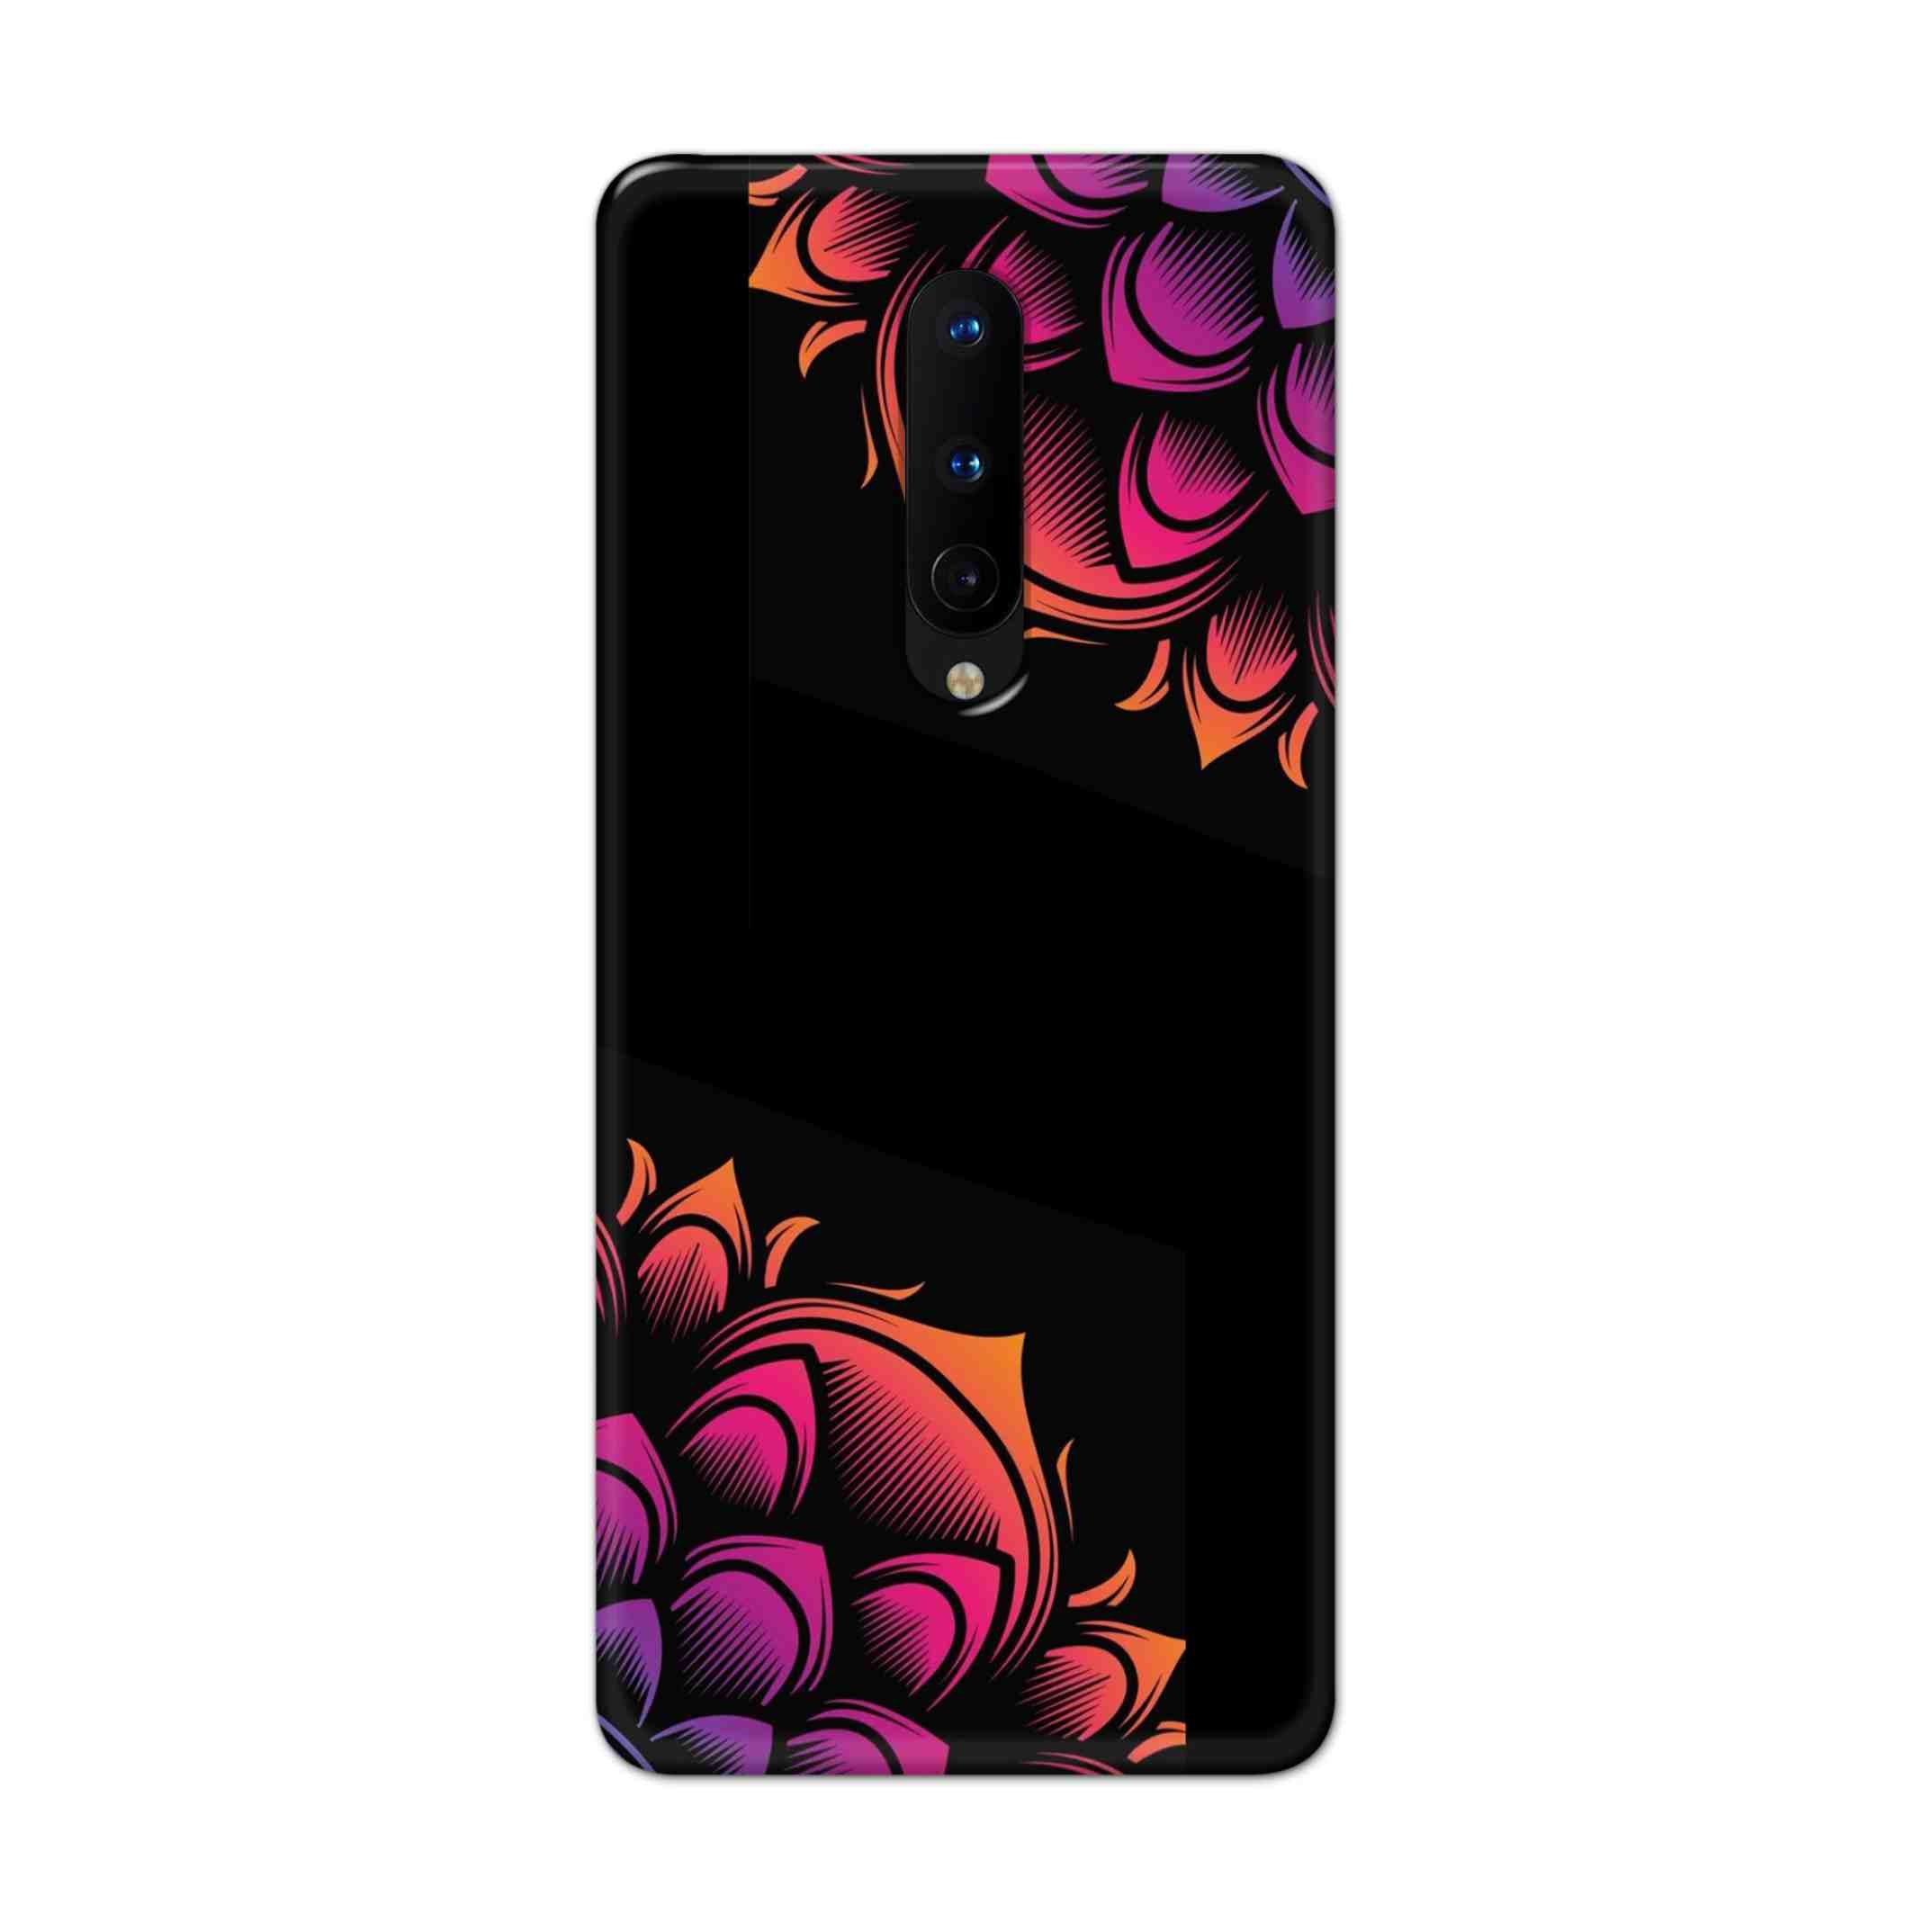 Buy Mandala Hard Back Mobile Phone Case Cover For OnePlus 8 Online